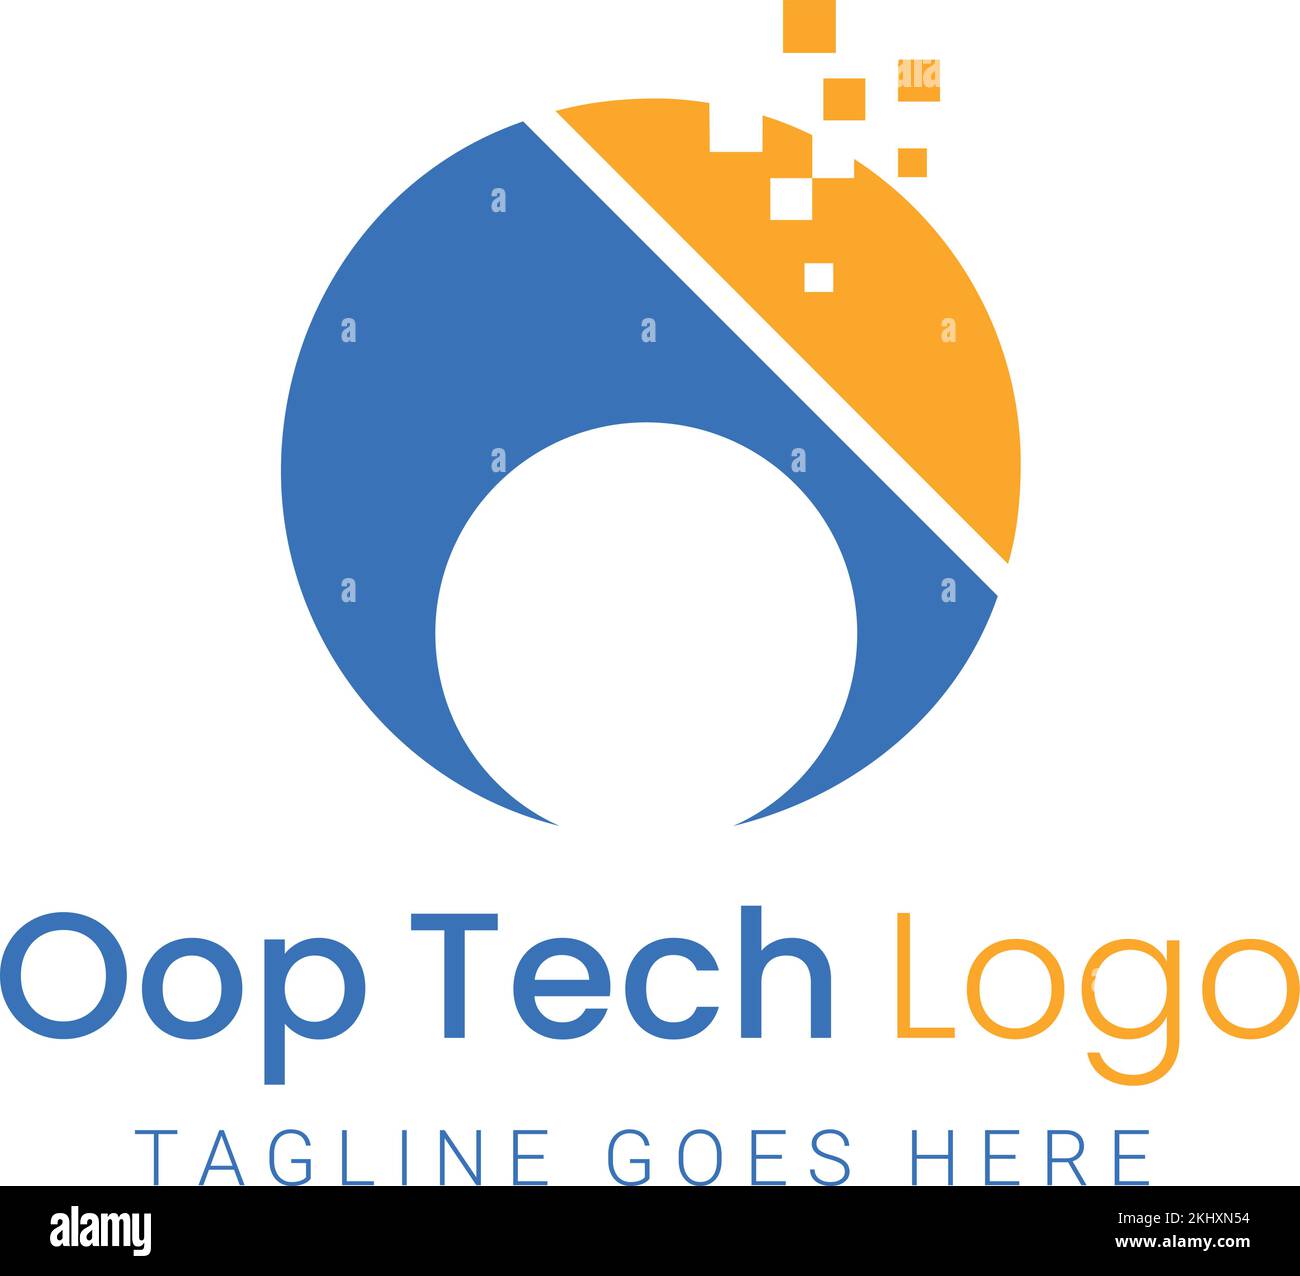 Oop Tech Logo Stock Vector